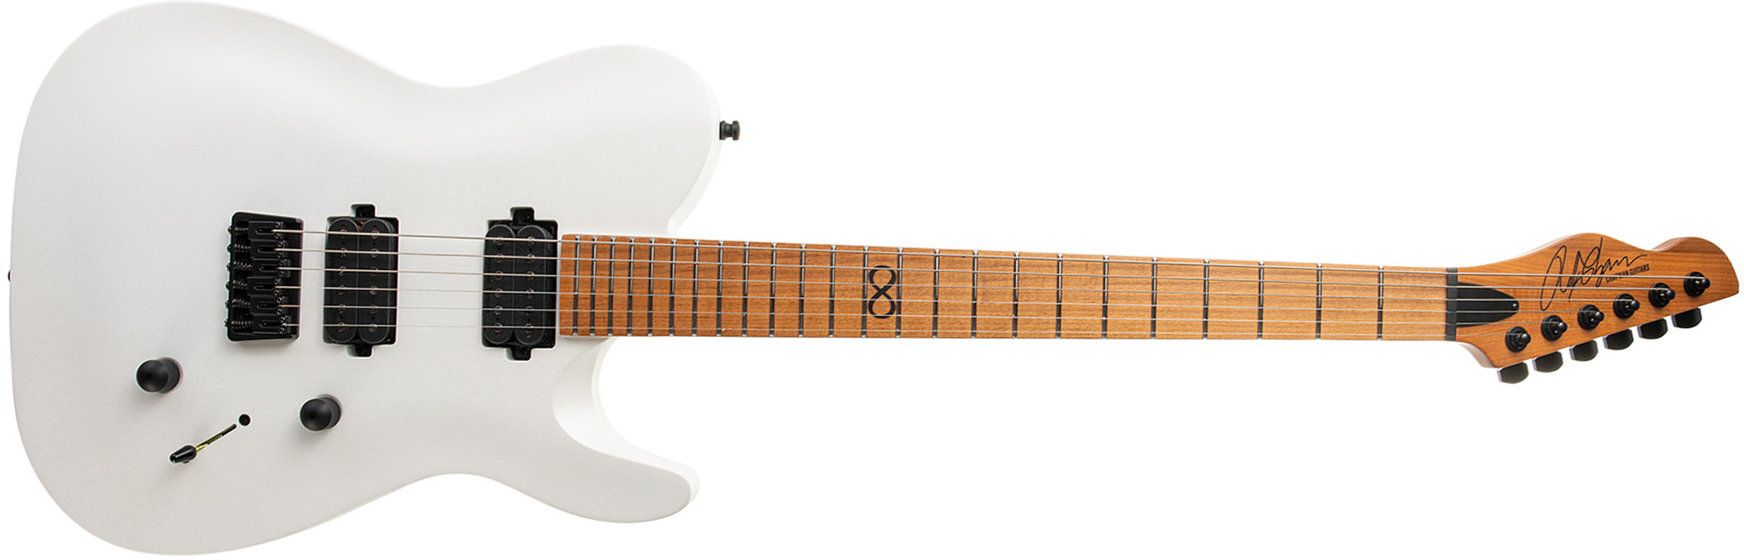 Chapman Guitars Ml3 Modern Pro Hh Seymour Duncan Ht Mn - Hot White - Televorm elektrische gitaar - Main picture